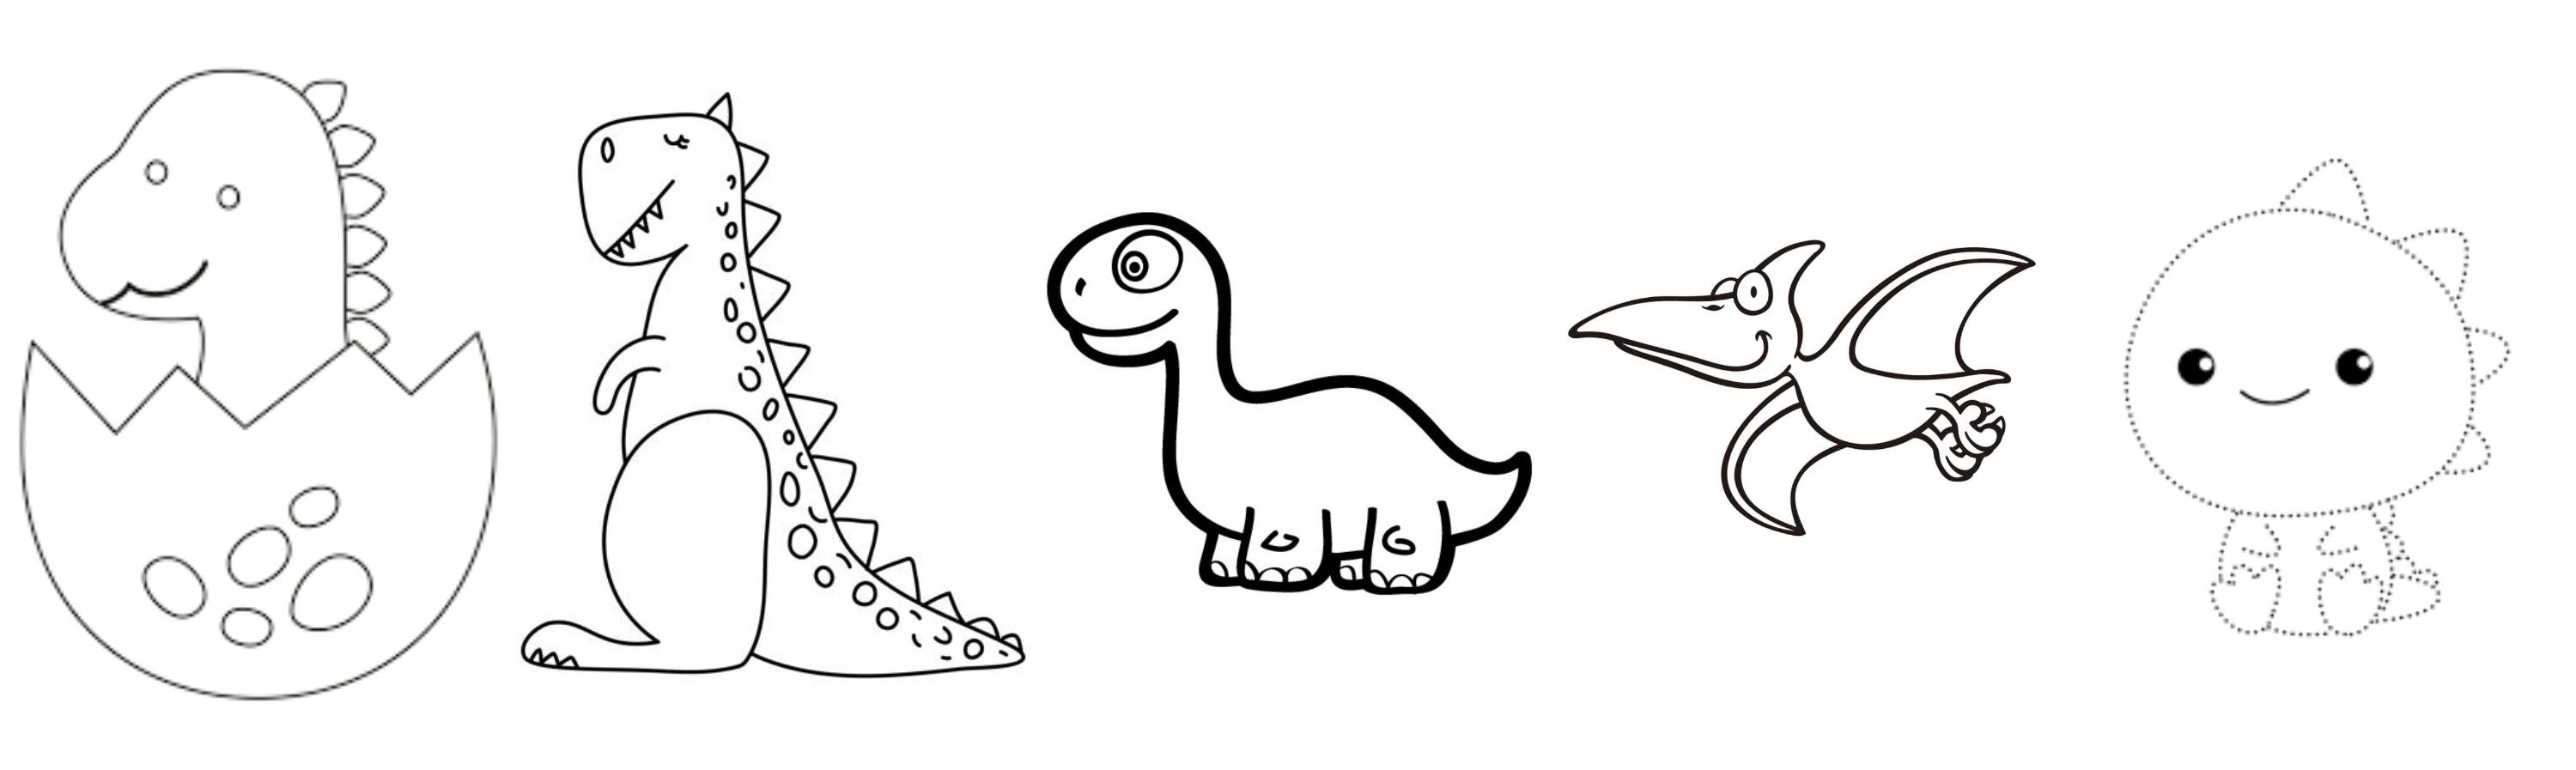 10 ideas de dibujos fáciles para hacer de dinosaurios